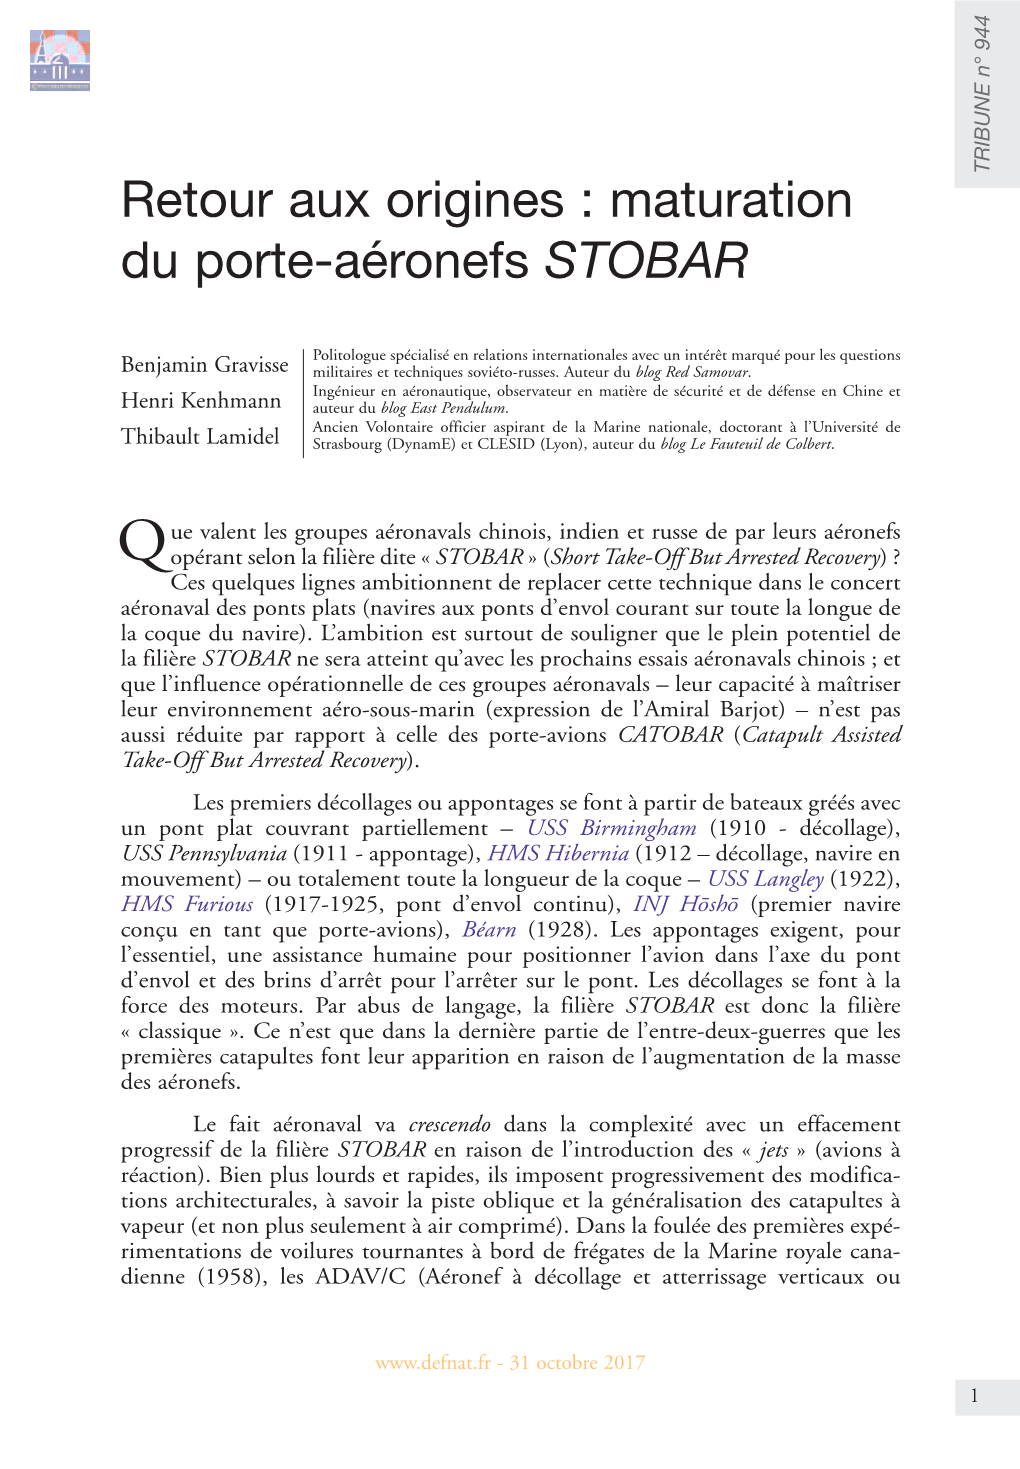 Maturation Du Porte-Aéronefs STOBAR